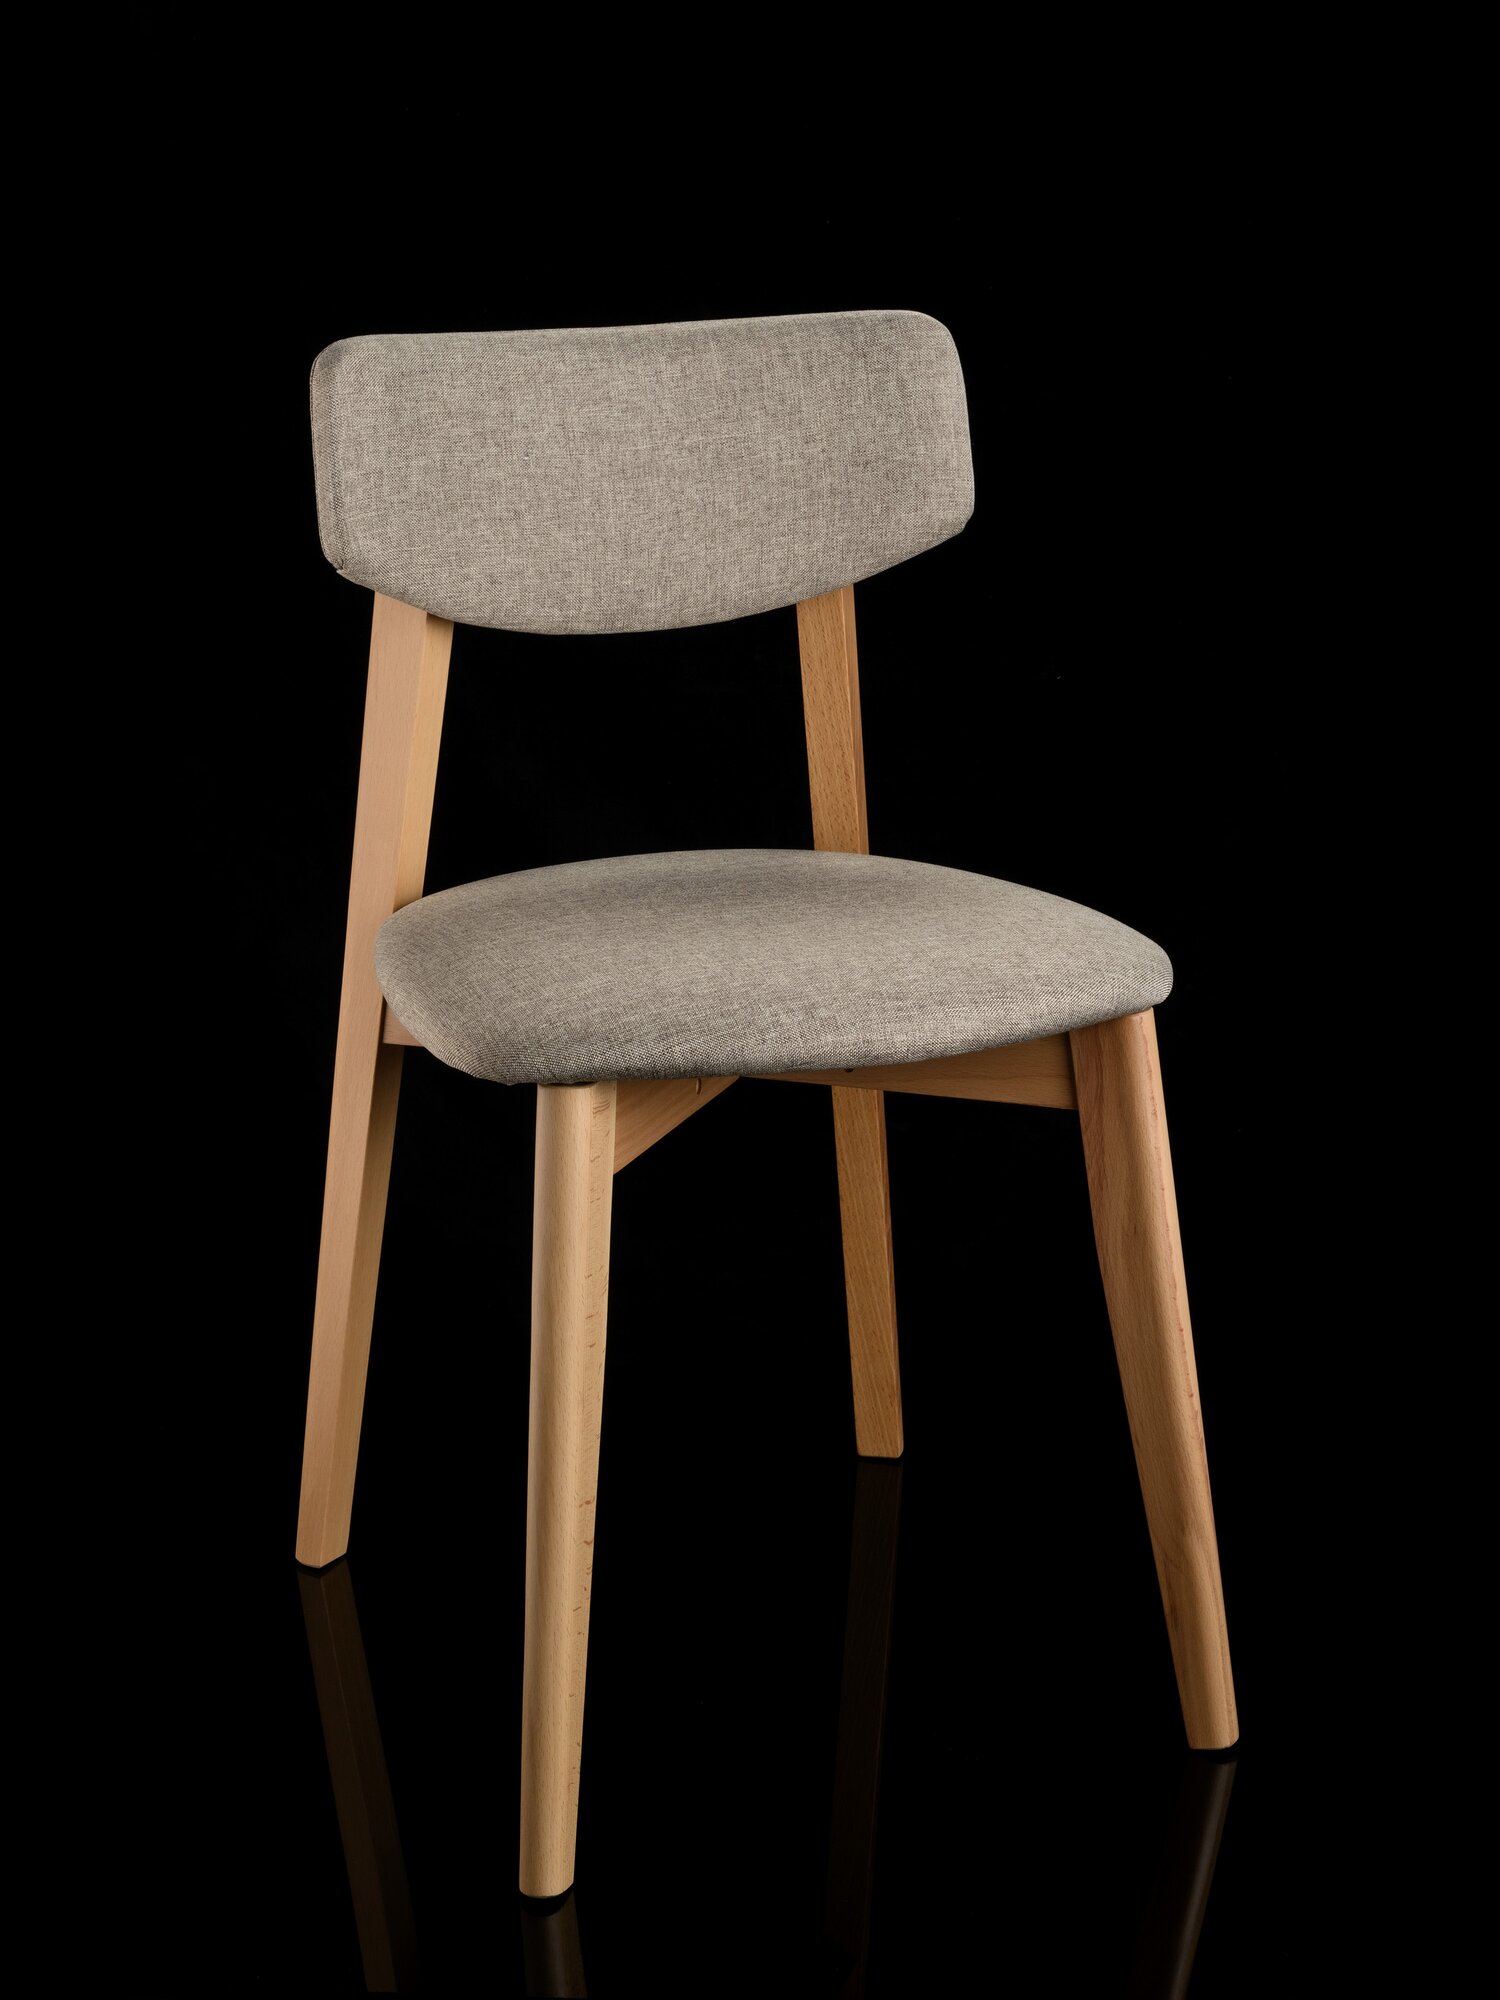 Мягкий кухонный стул со спинкой, деревянный ВС/145, виста